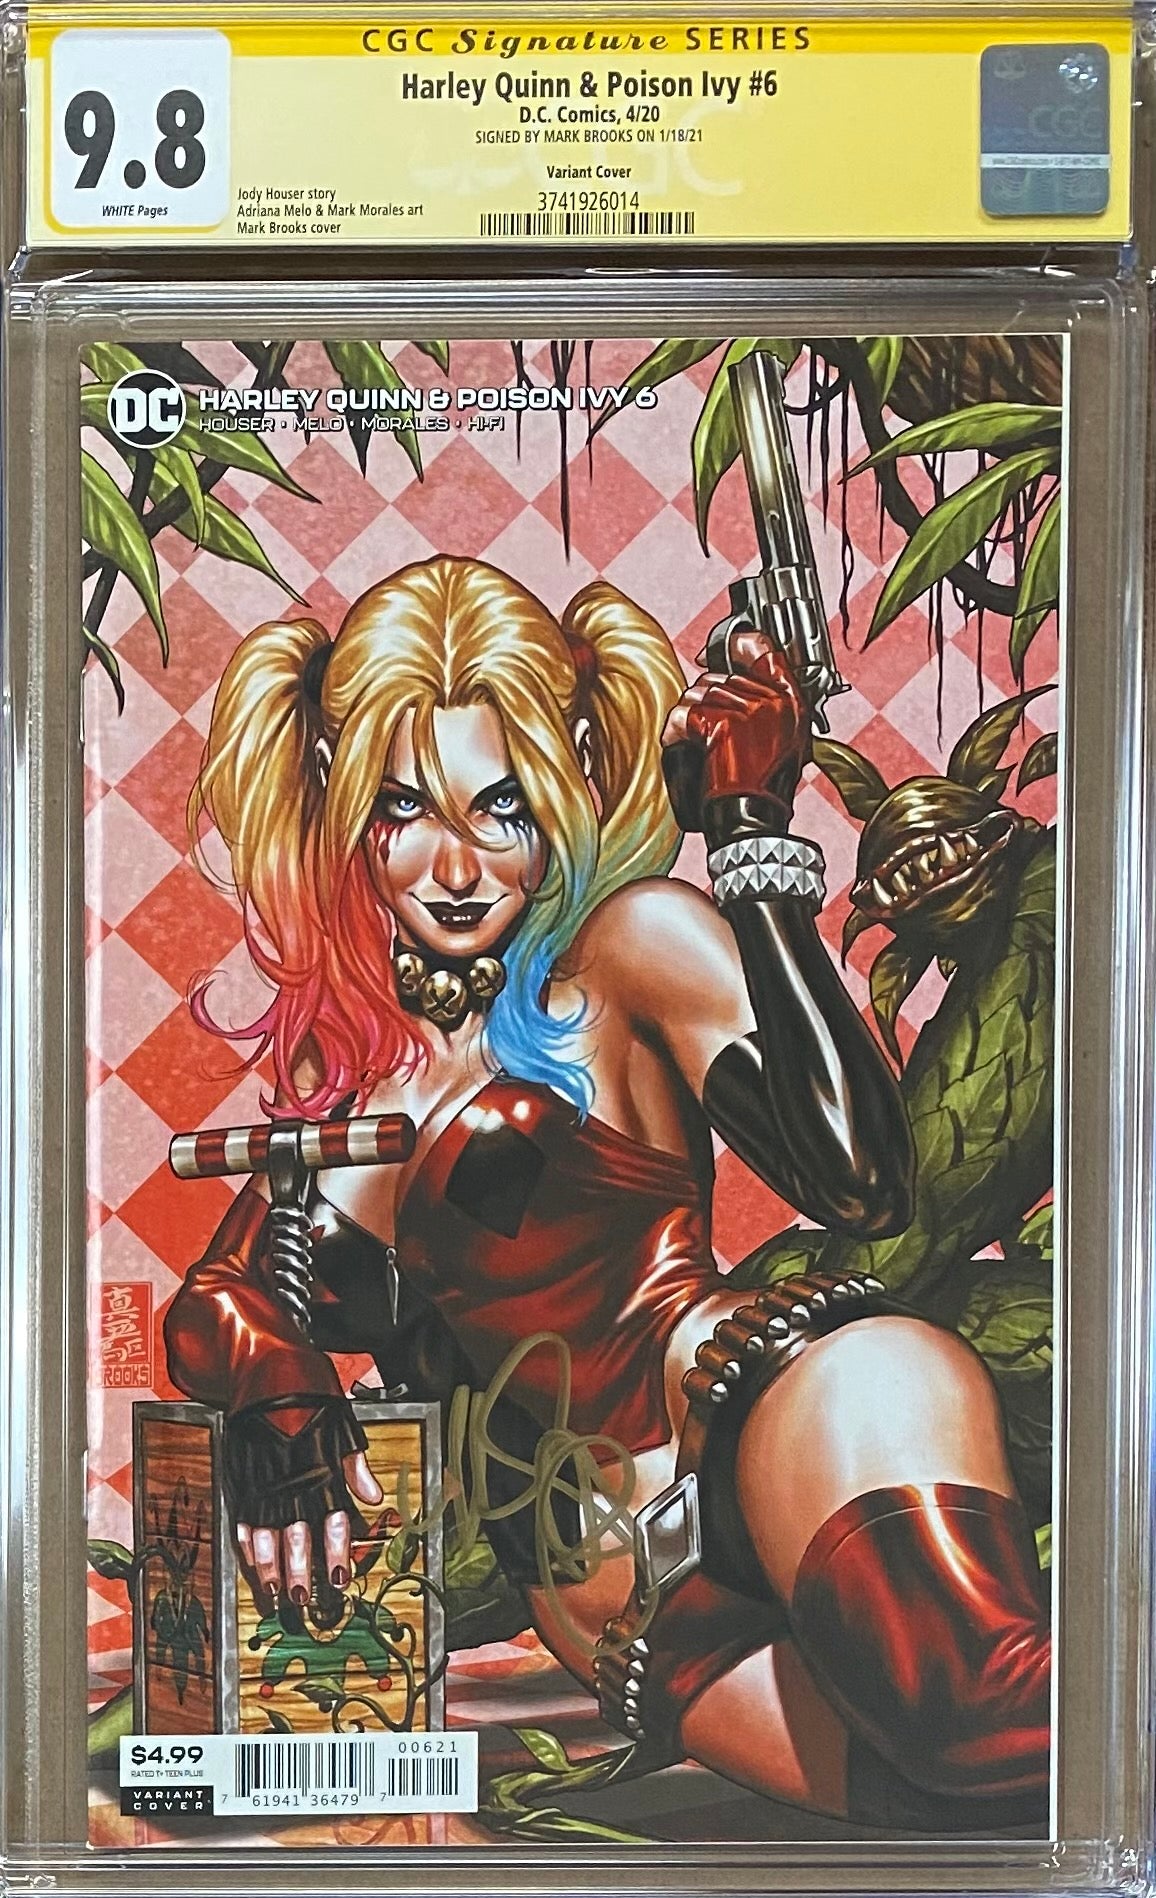 Harley Quinn & Poison Ivy #6 Brooks "Harley Quinn" Connecting Variant CGC 9.8 SS